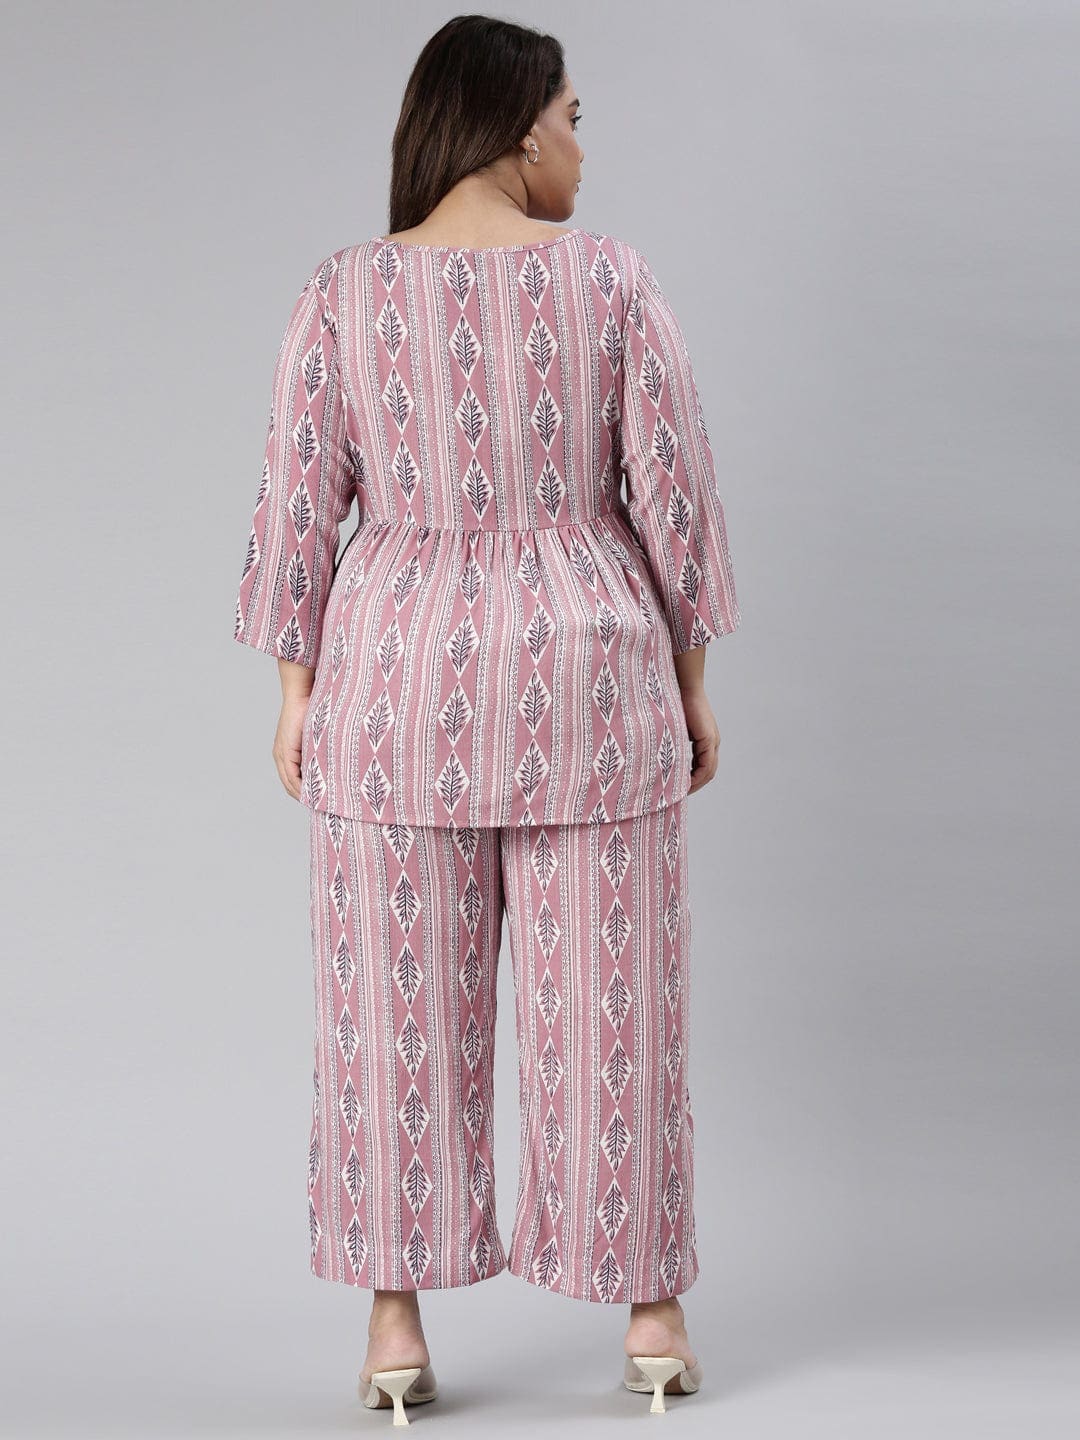 Buy  peplum dress /Women's /Pink ethnic printed /peplum top /palazzo pant on online from the Shaili